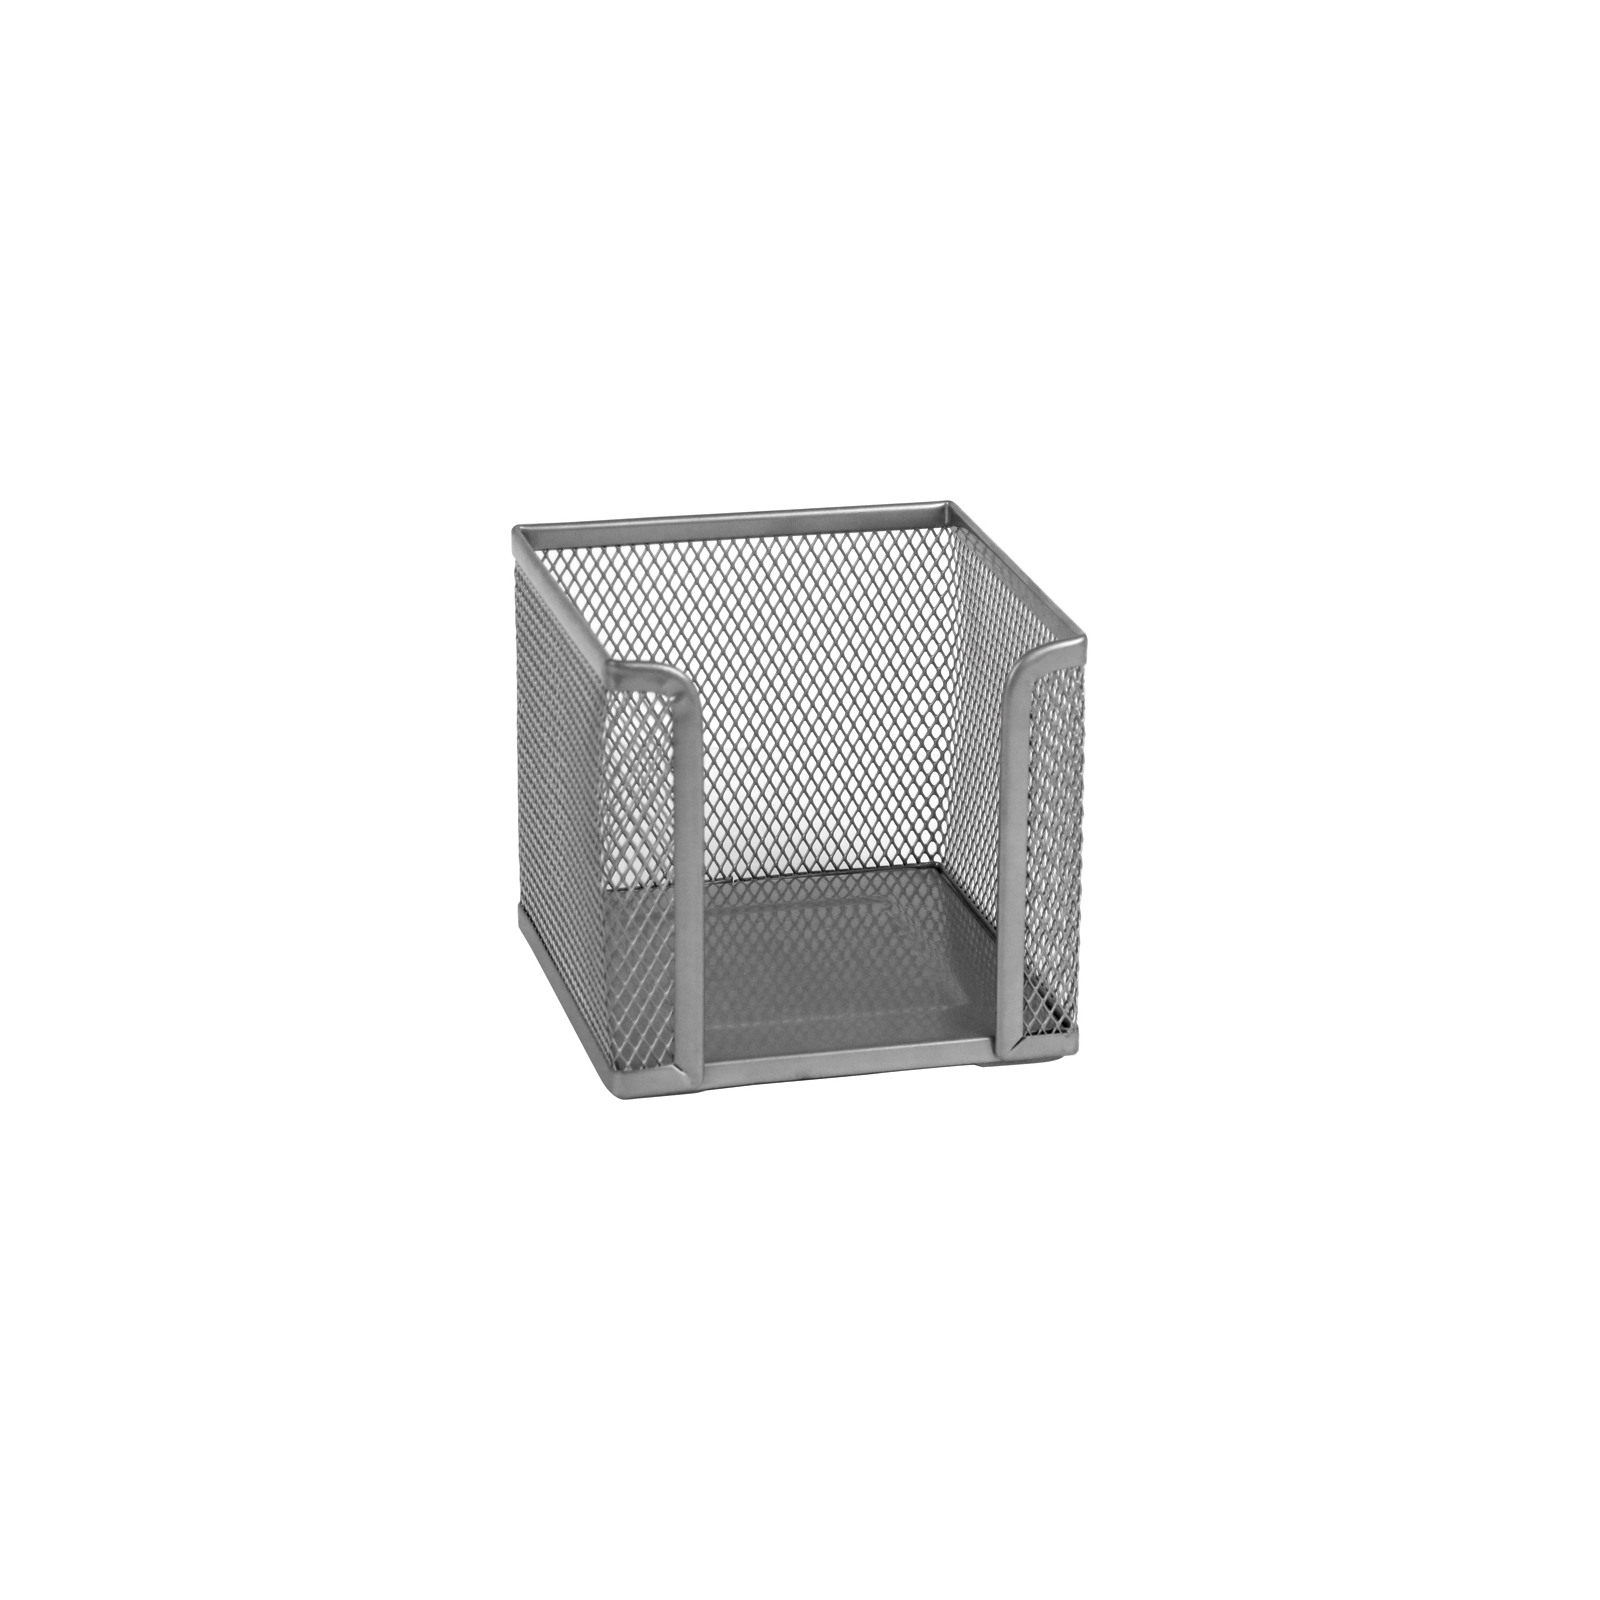 Подставка-куб для писем и бумаг Axent 100х100x100мм, wire mesh, silver (2112-03-A)